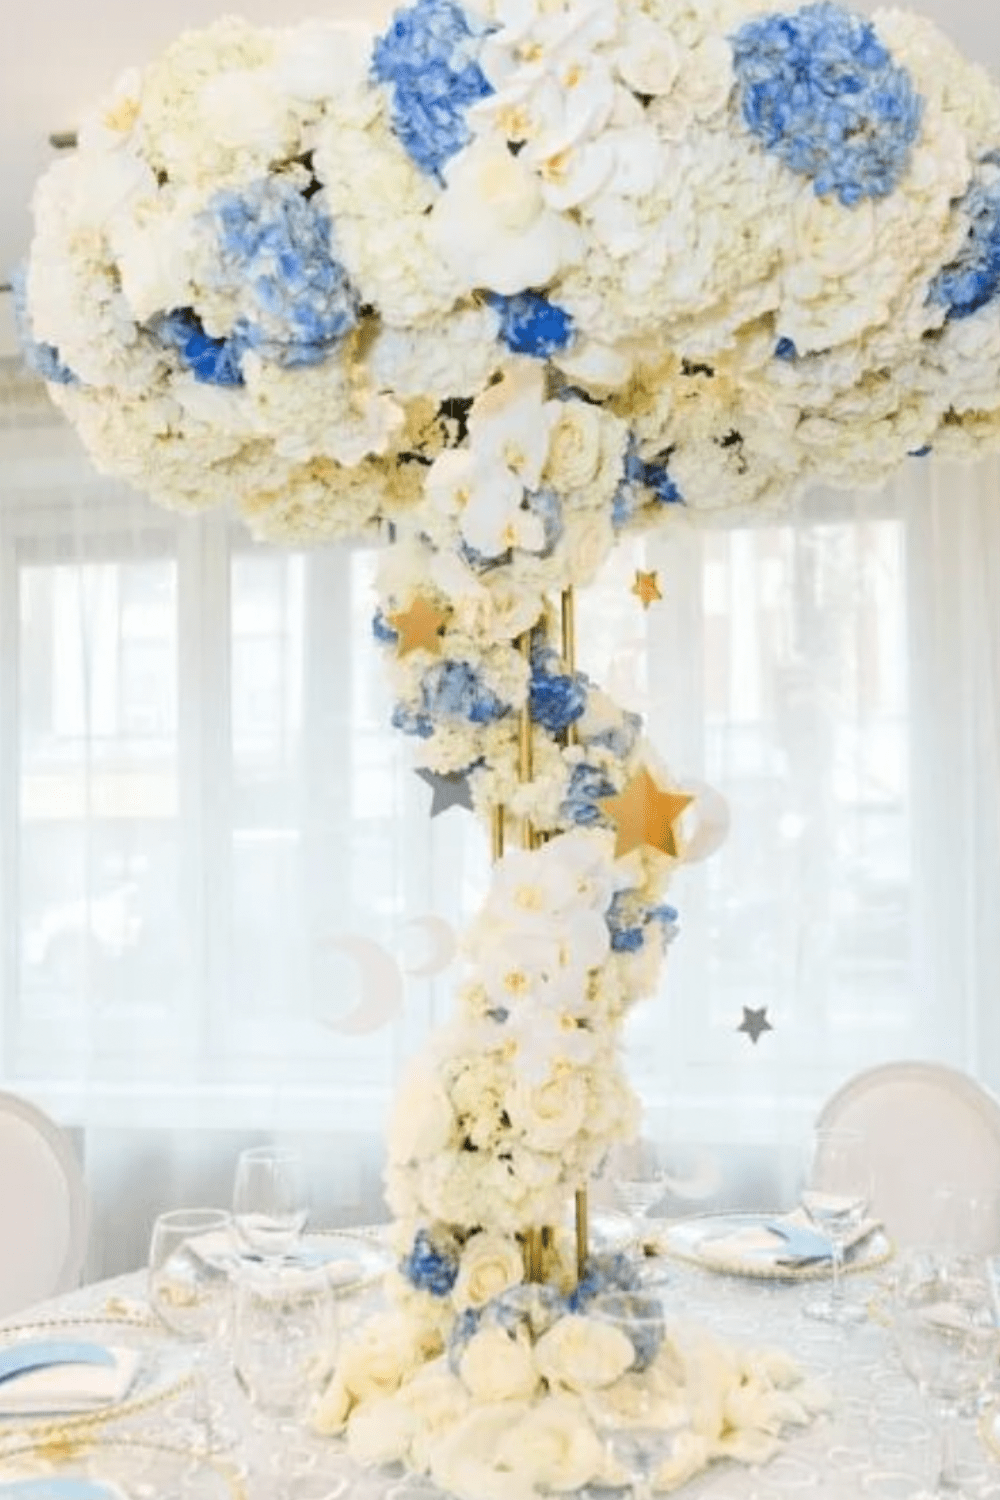 Metal Wedding Centerpiece for Tables Wedding Decor Flower Stand Wedding  Decoration Floral Stand 